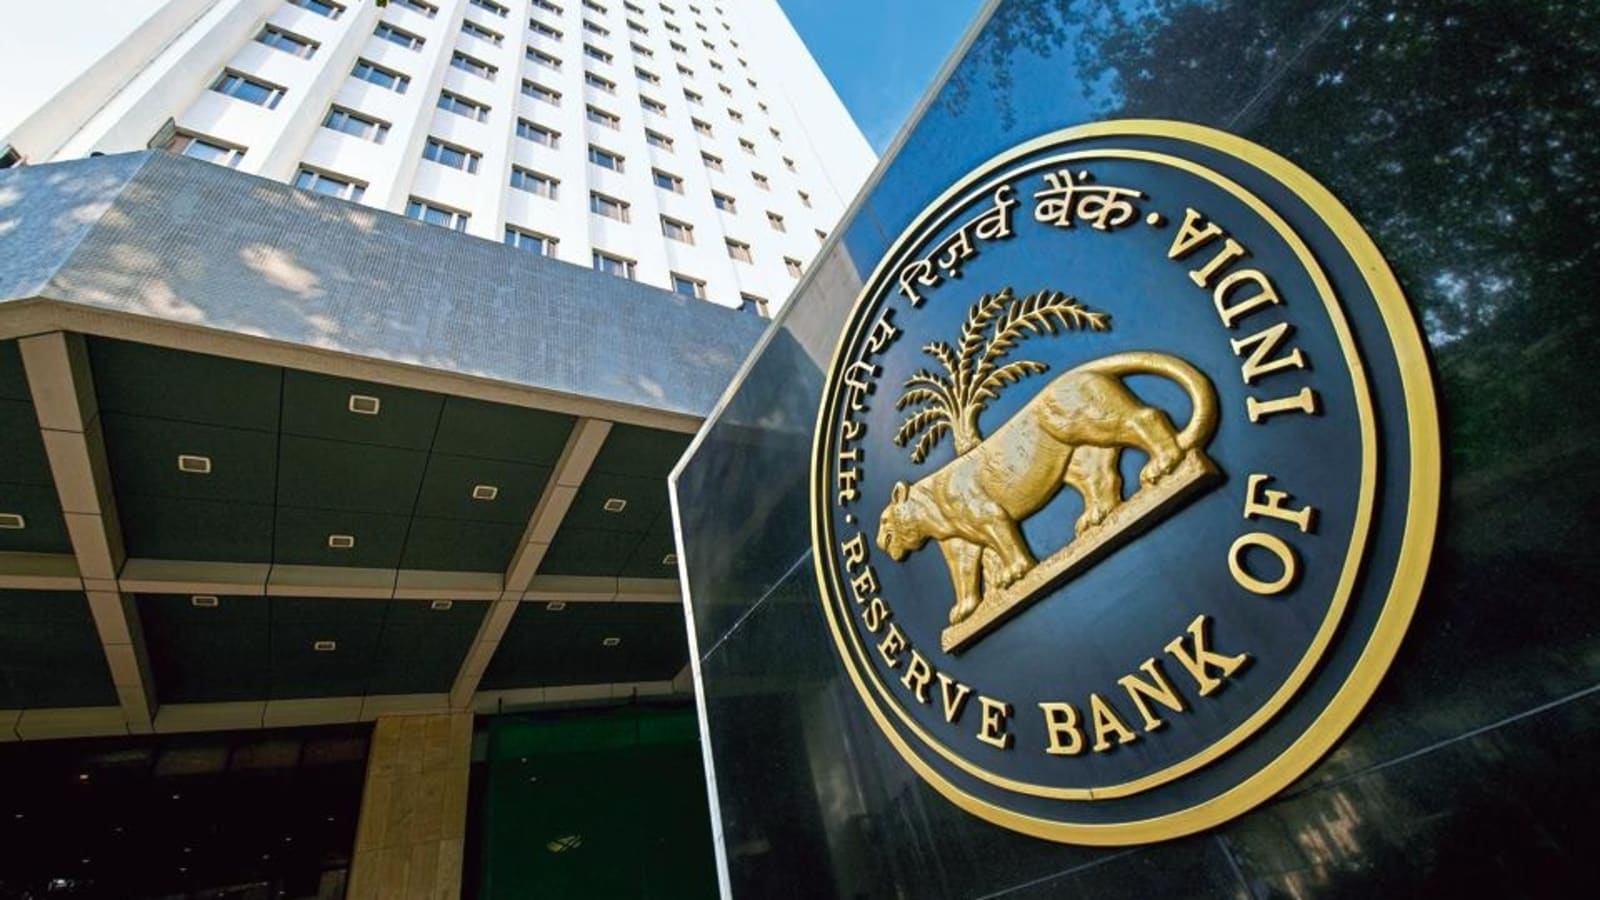 rbi must disclose financial information regarding banks: supreme court | latest news india - hindustan times